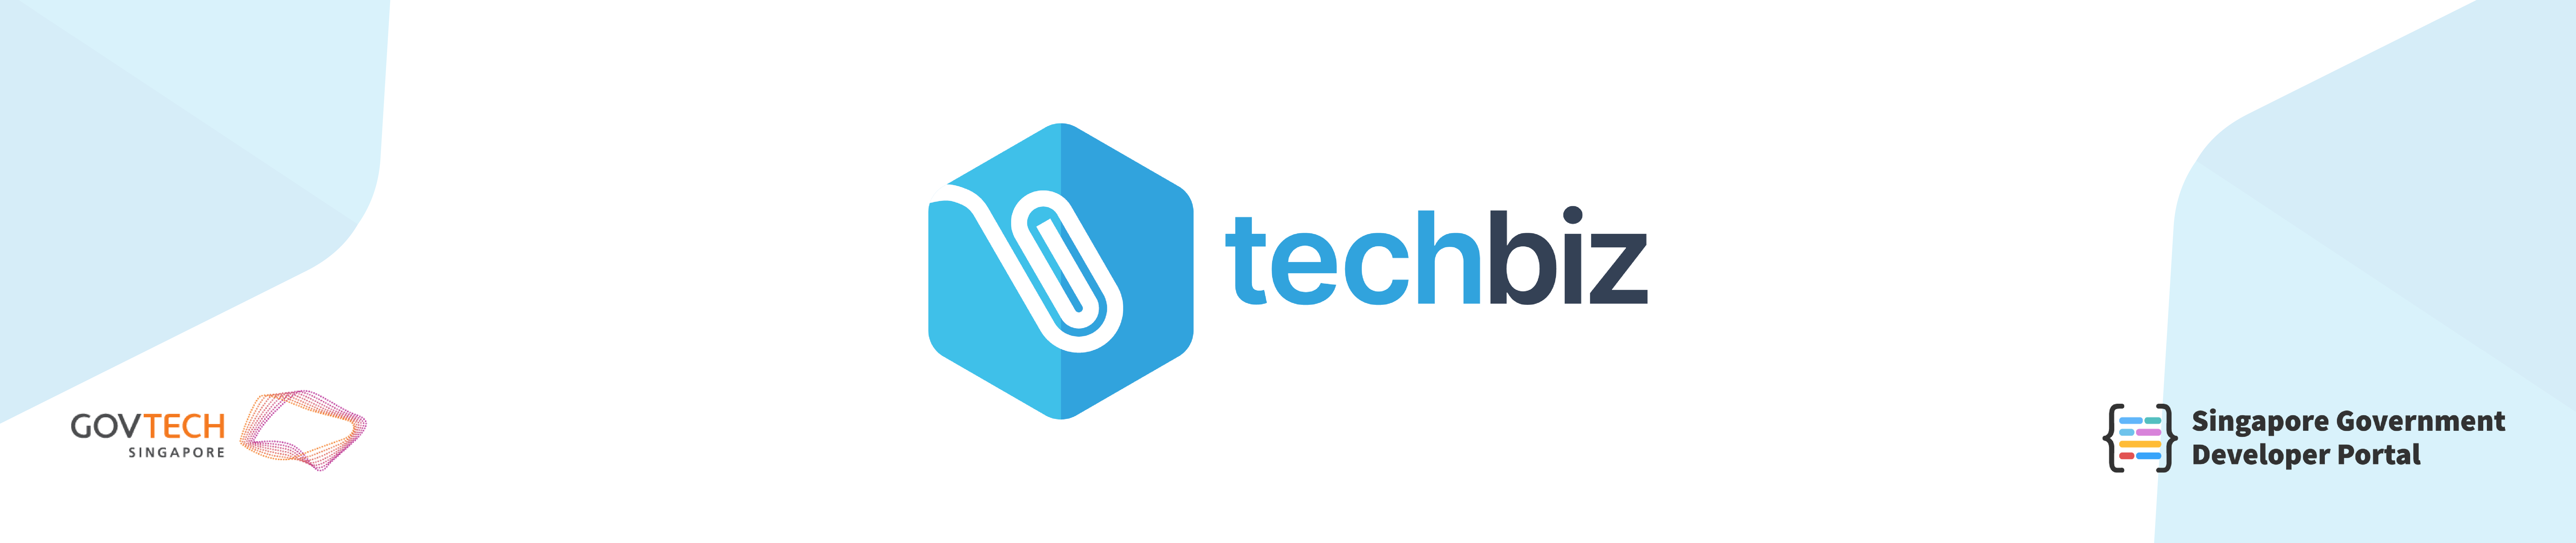 TechBiz header banner